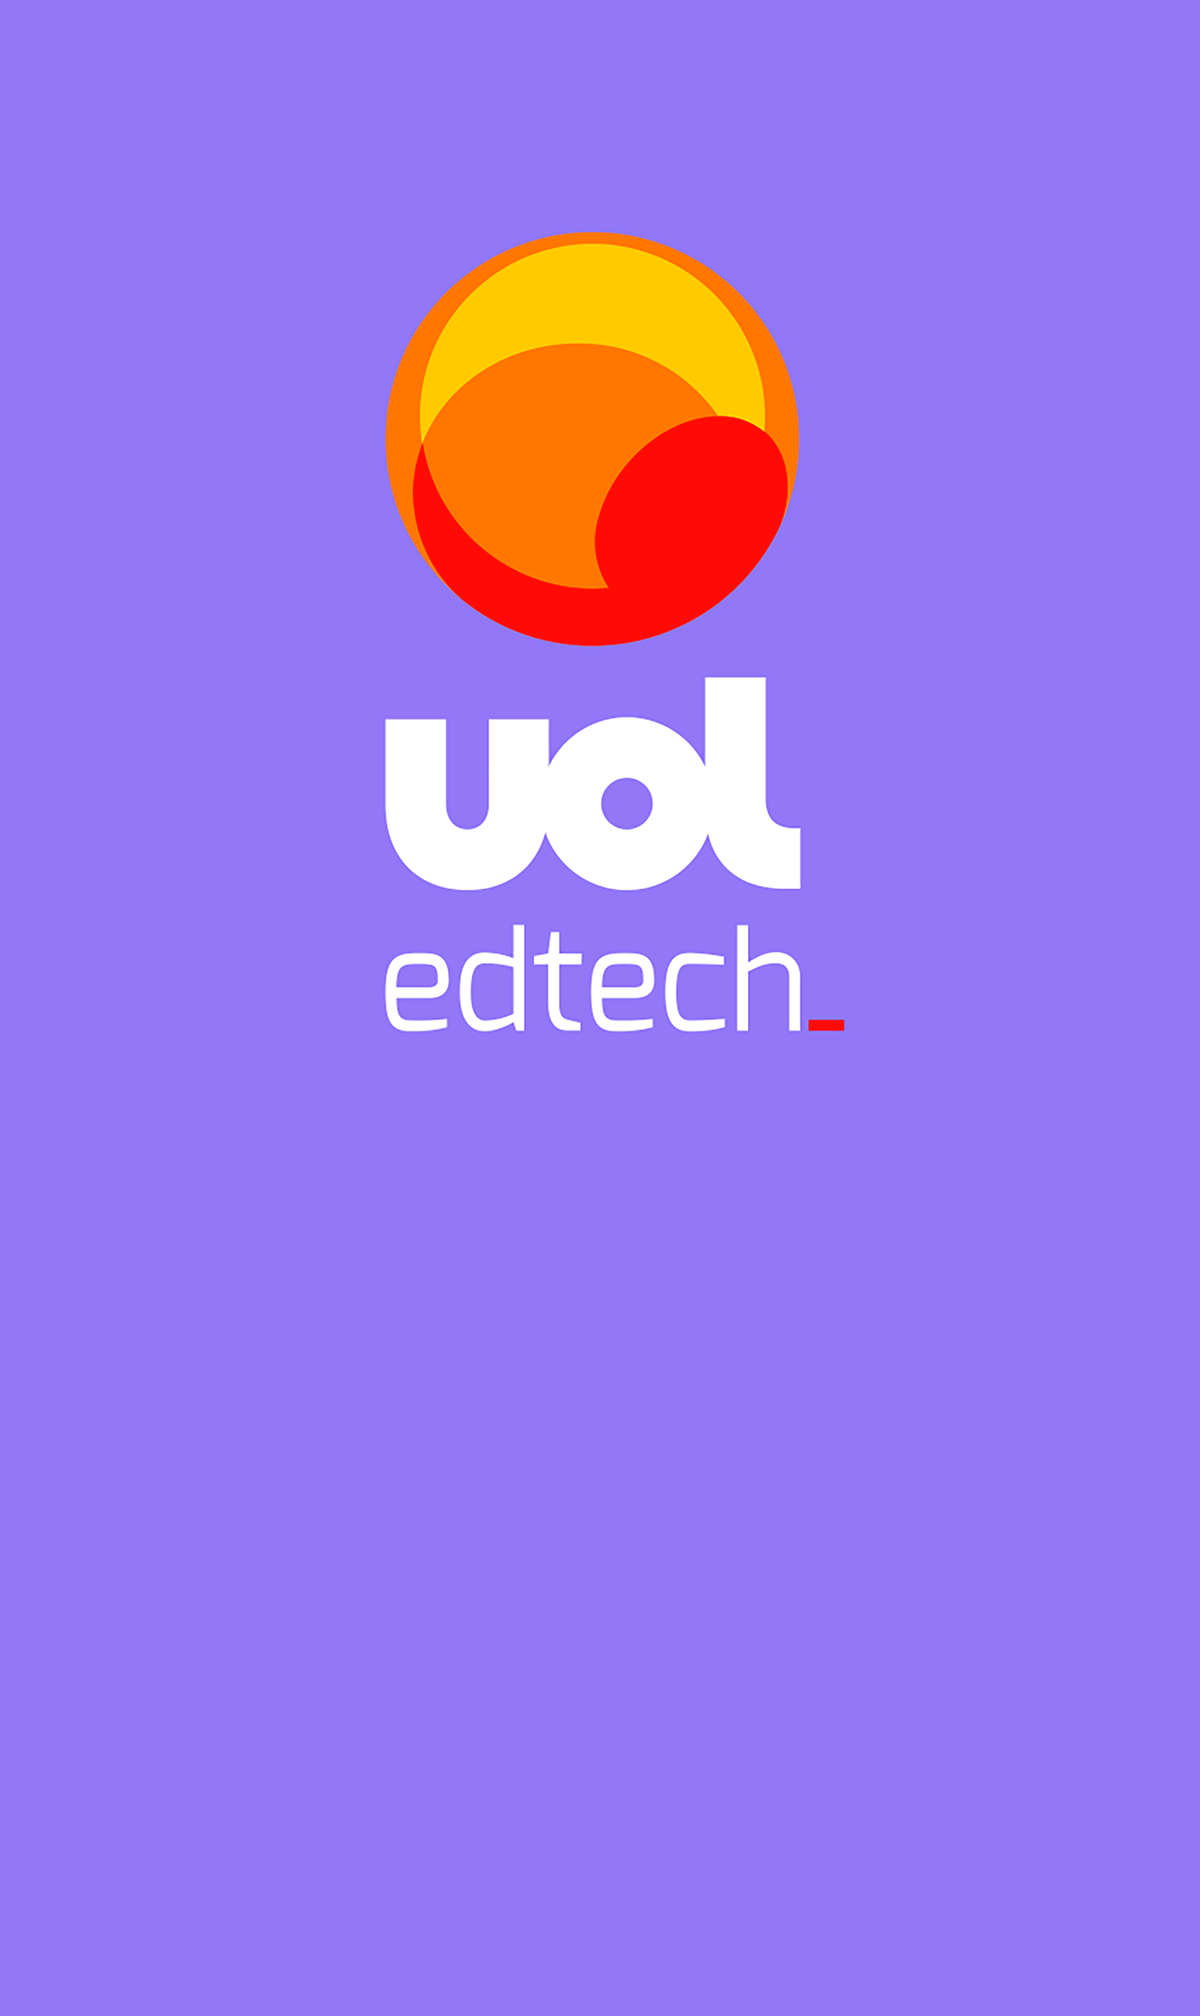 logos_uol_edtech_3